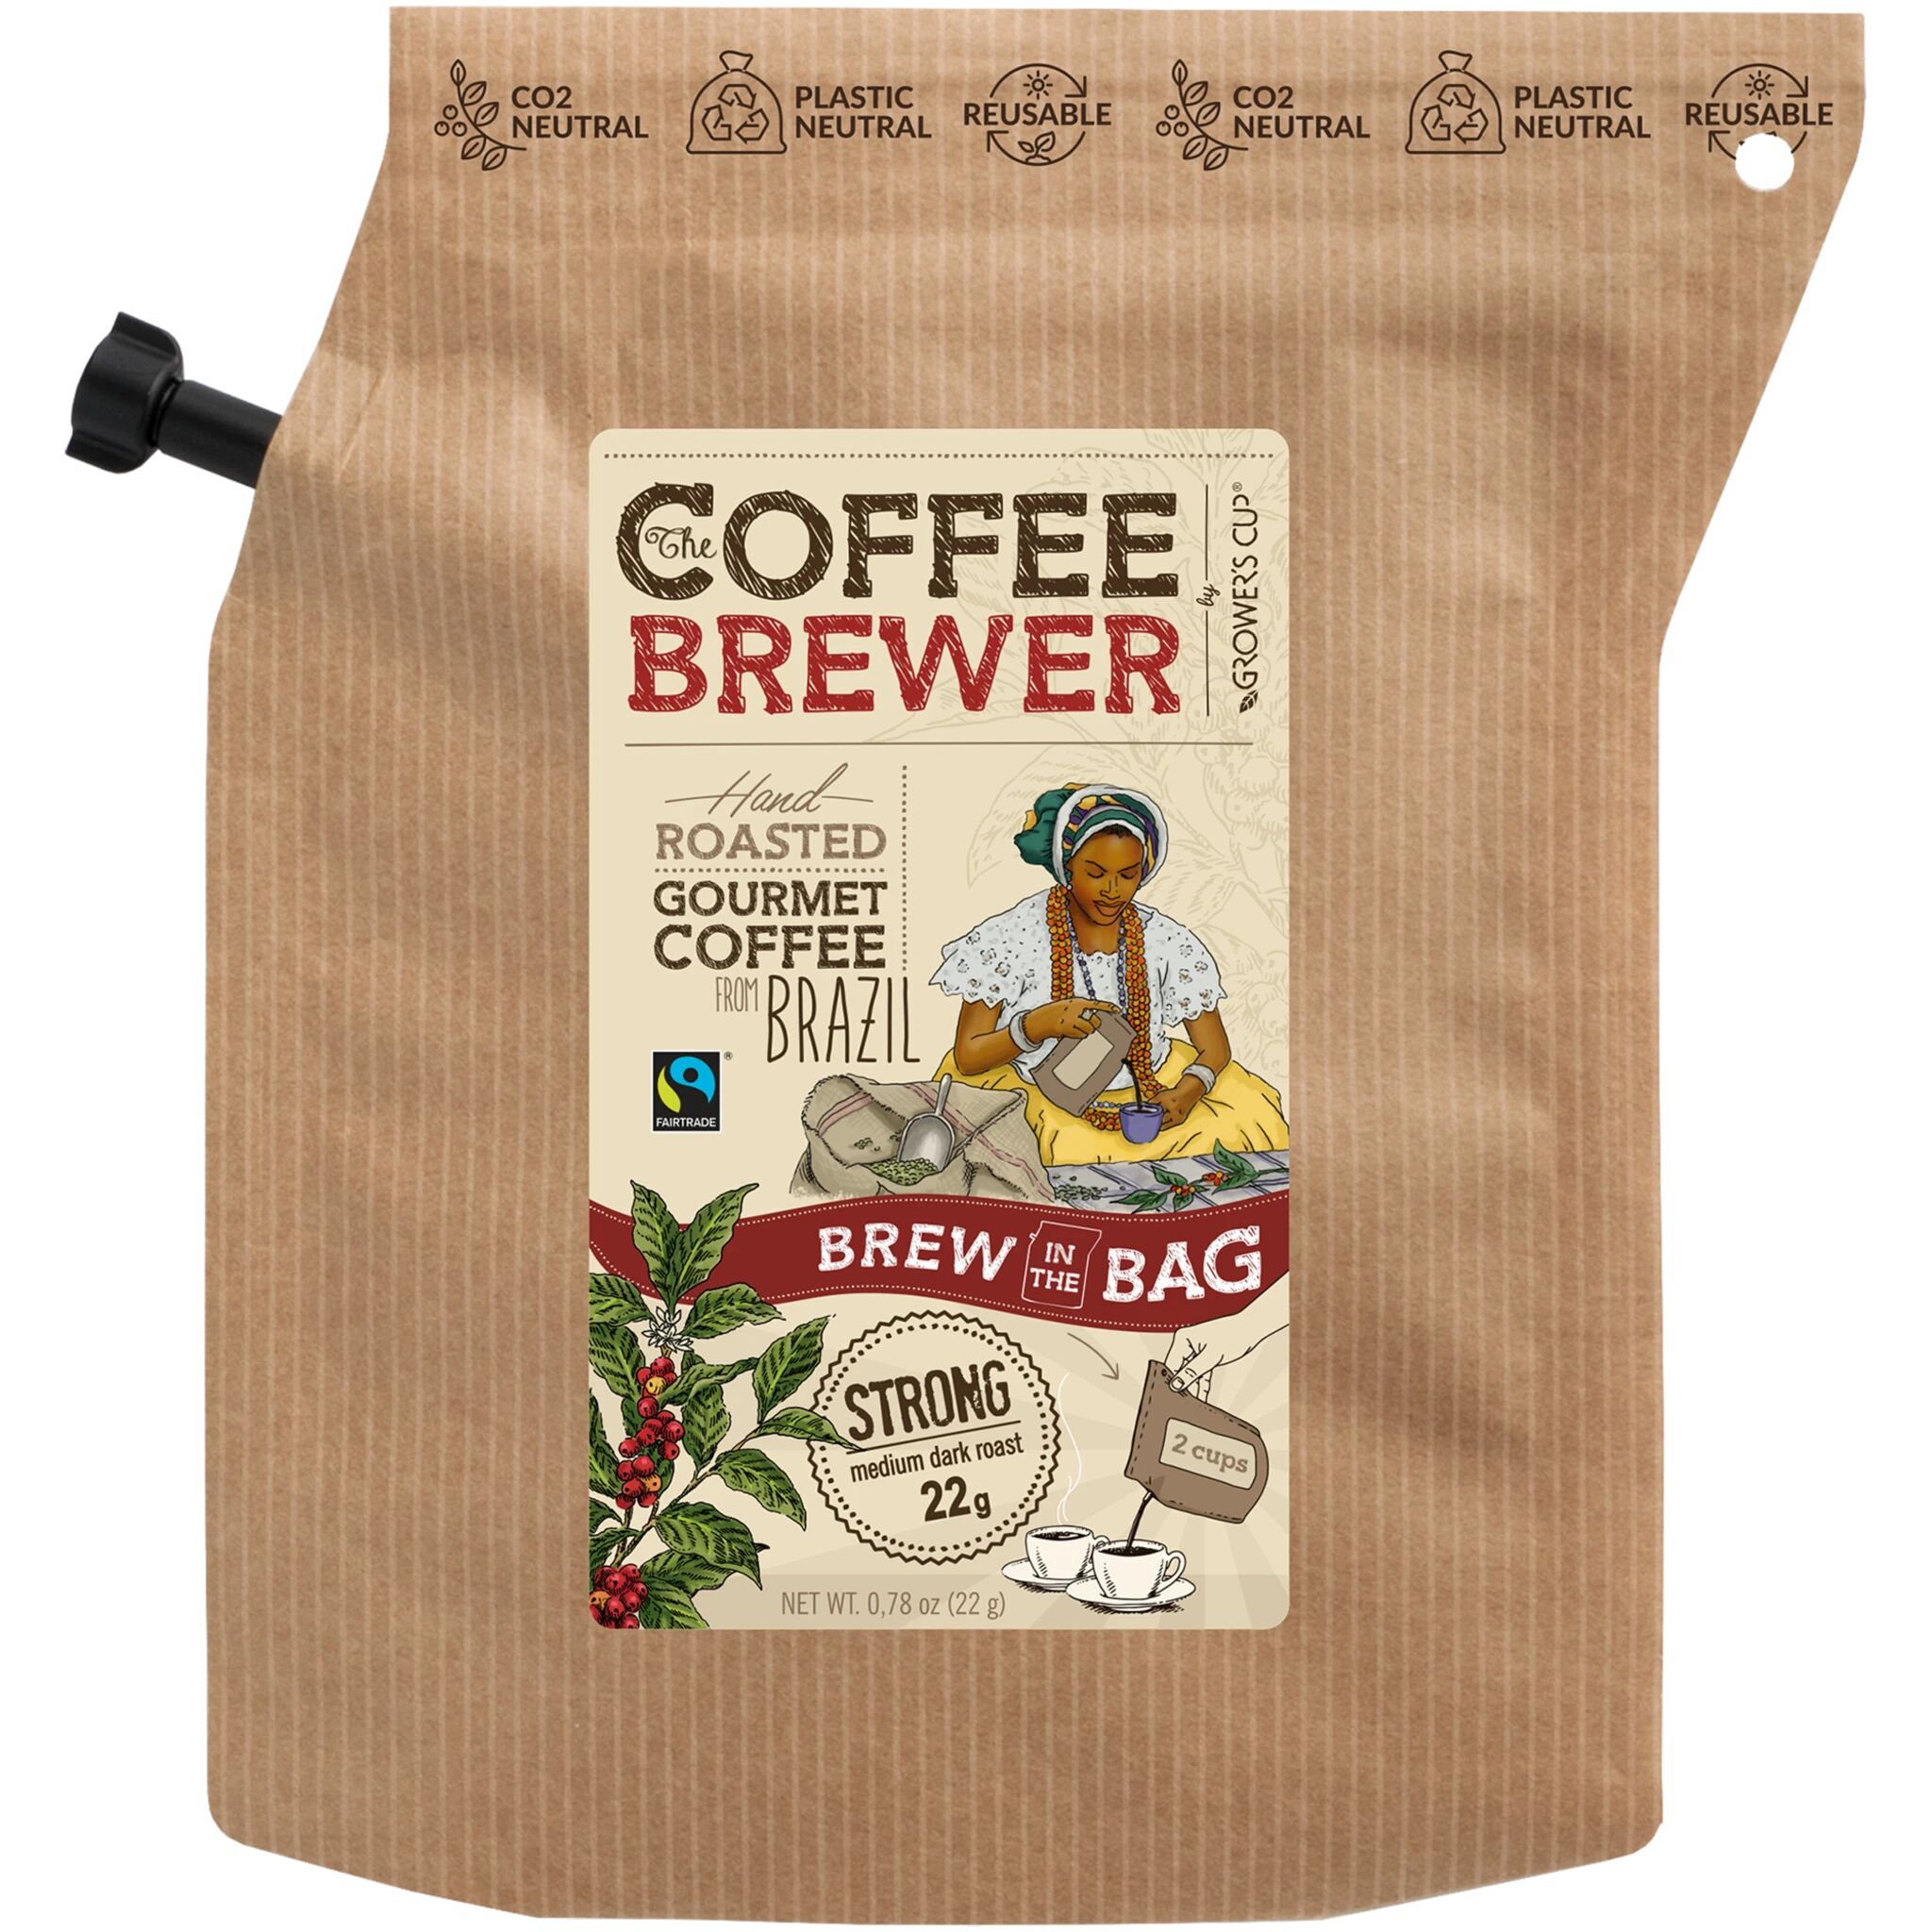 The Brew Company Brazil 2 Cup Coffee, Strong, Medium dark roast, turkaffe STD Green Bag